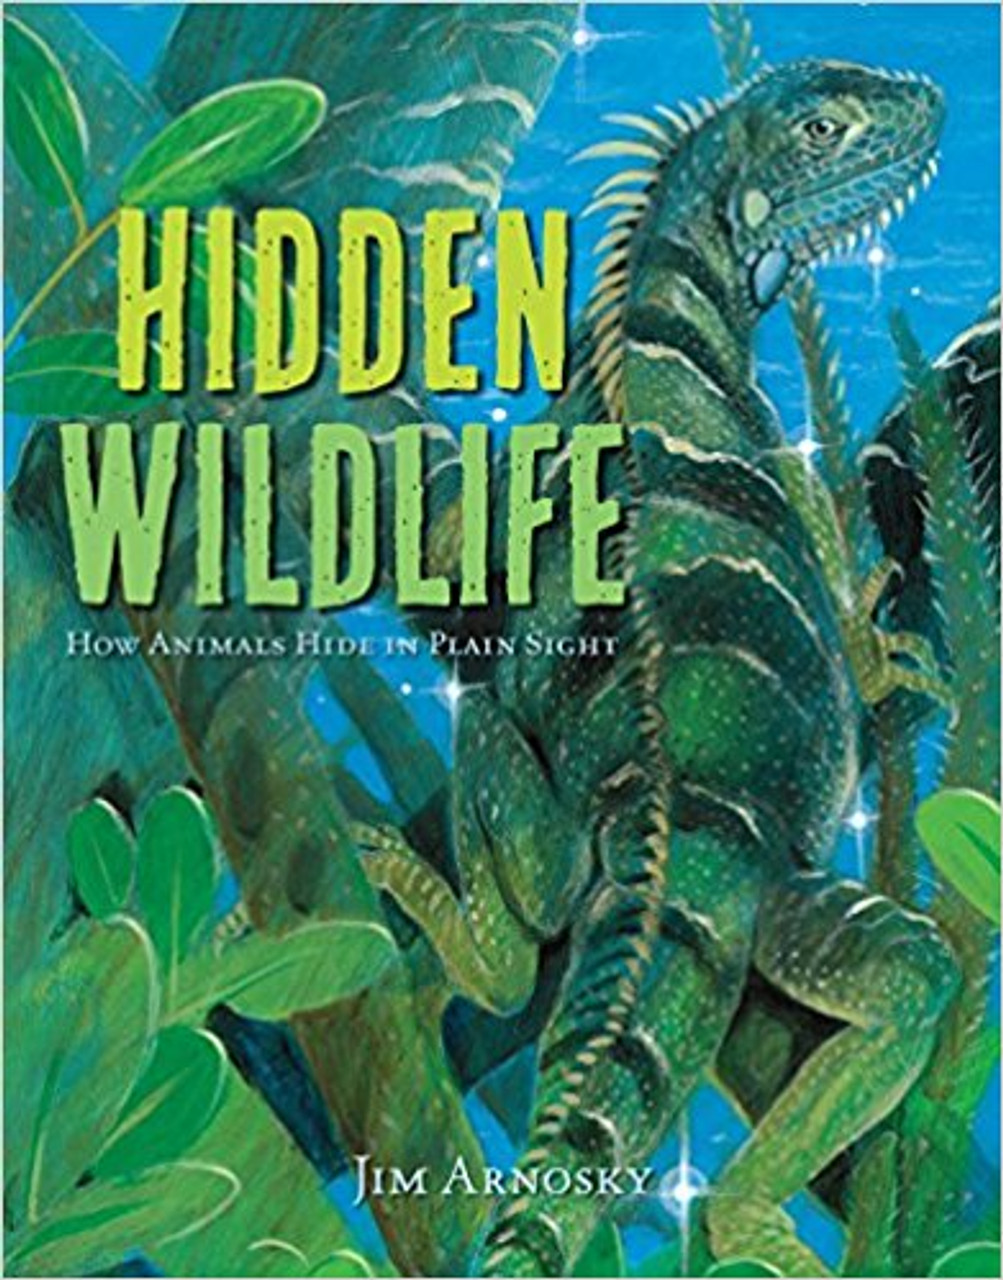 Hidden Wildlife: How Animals Hide in Plain Sight by Jim Arnosky